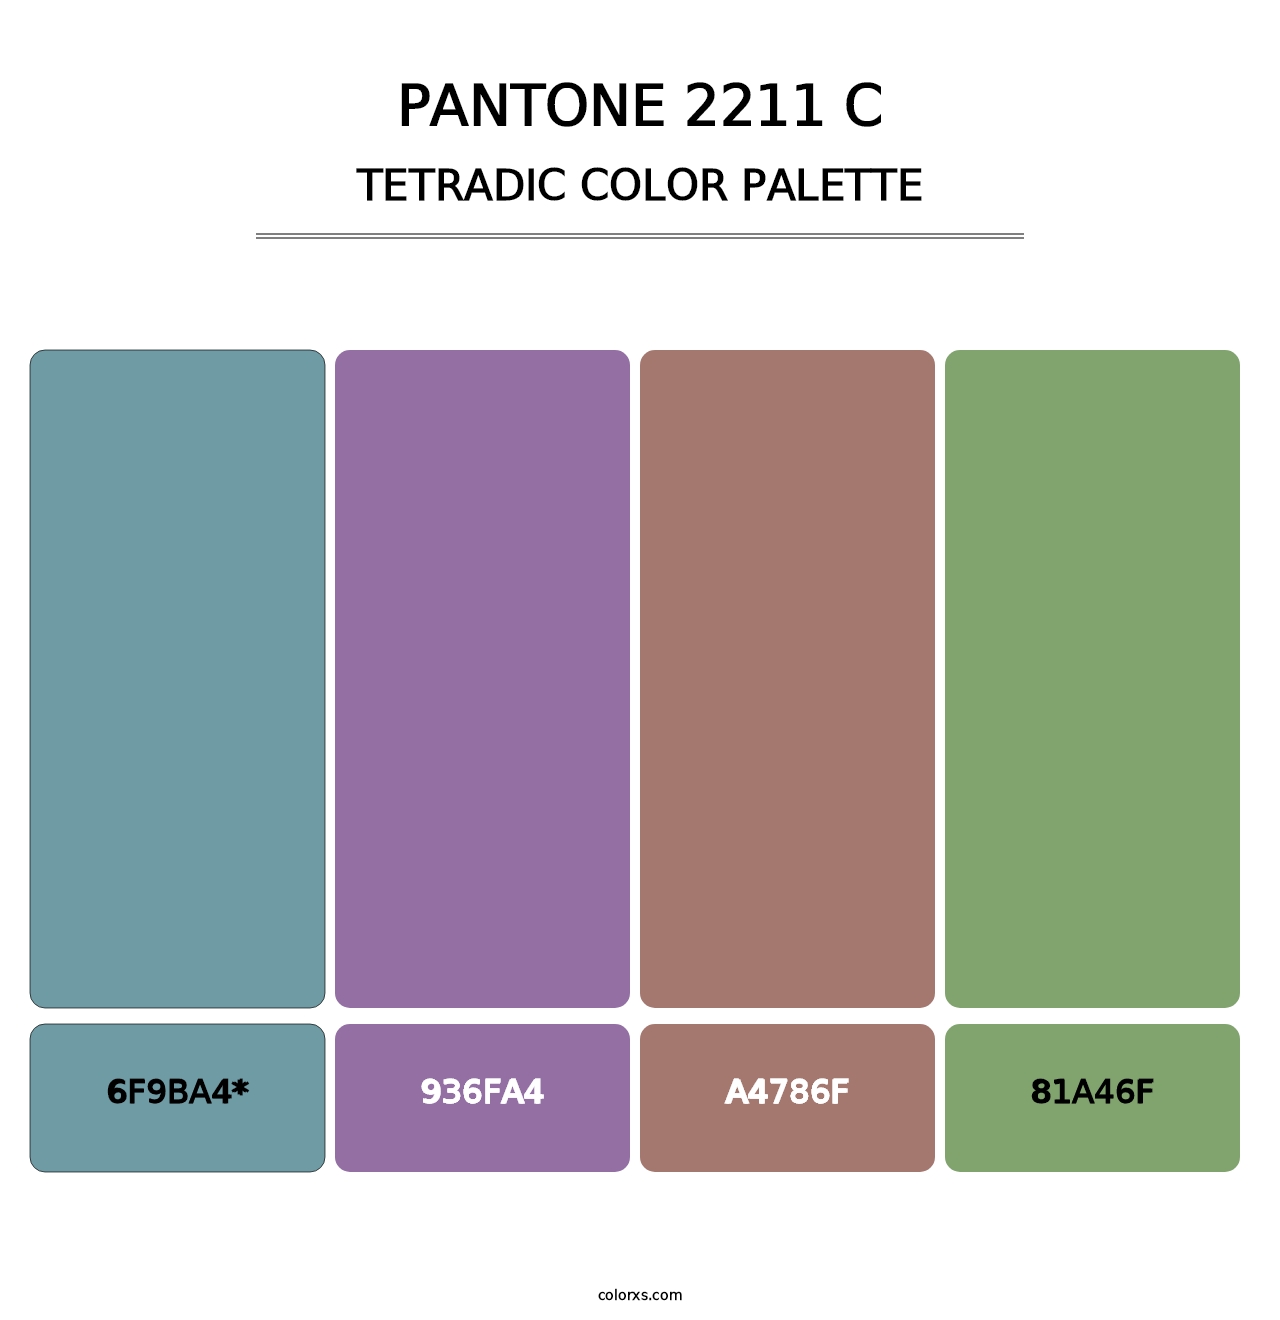 PANTONE 2211 C - Tetradic Color Palette